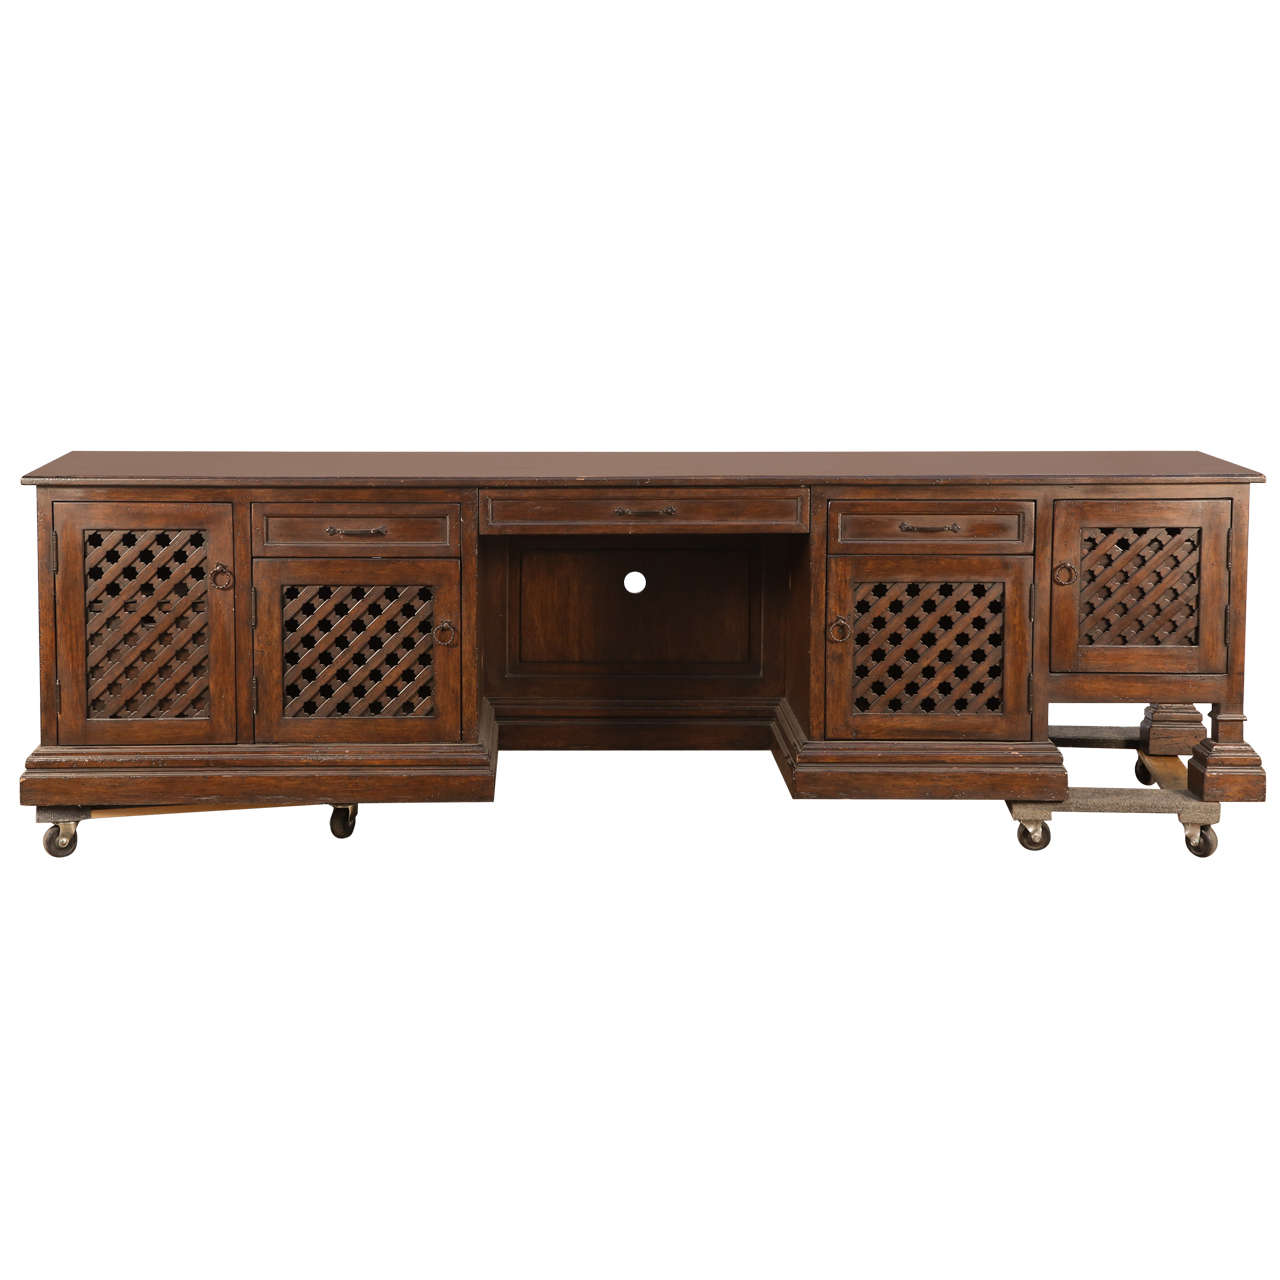 Moroccan Handcrafted Desk, Vanity or Dresser With Moorish Star Designs